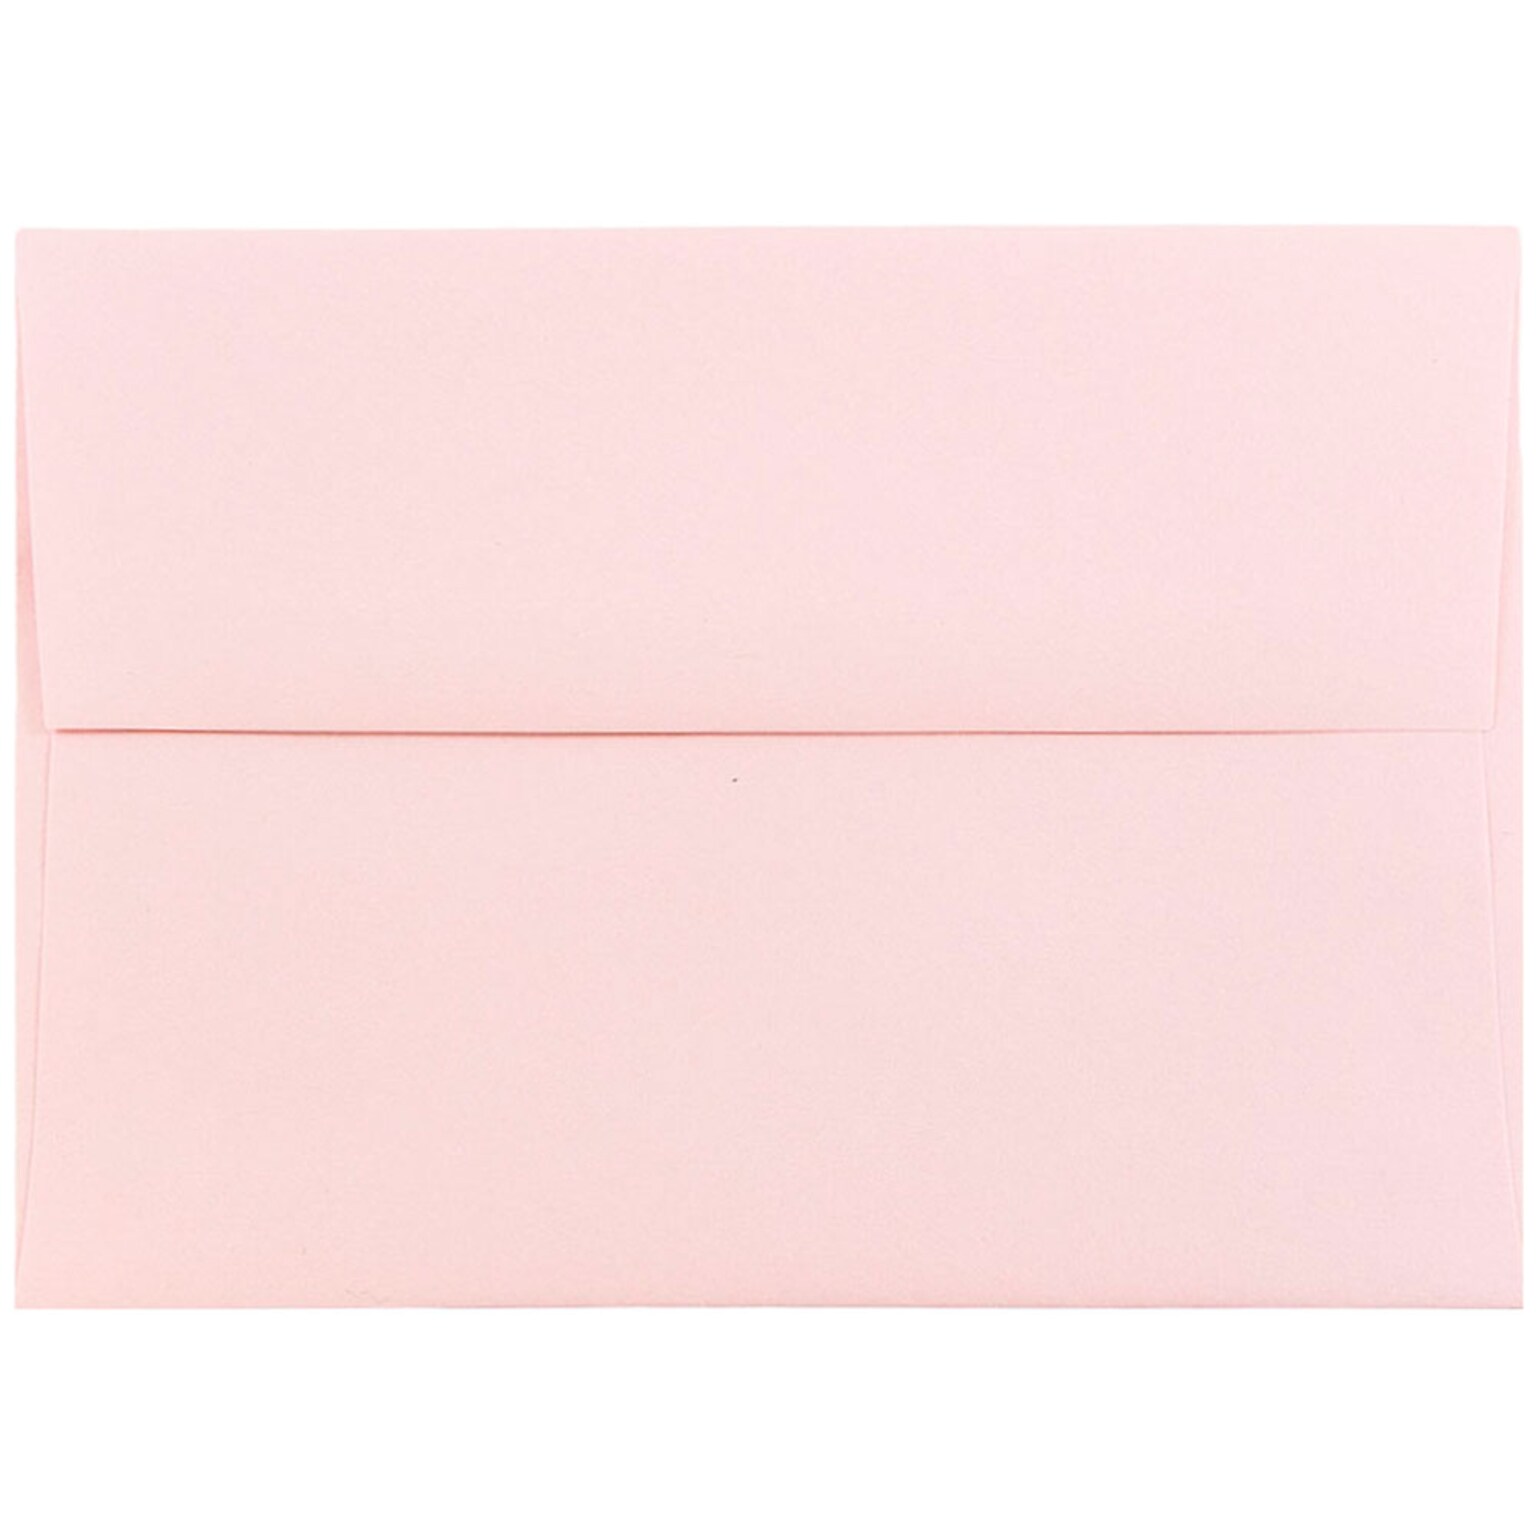 JAM Paper A6 Invitation Envelopes, 4.75 x 6.5, Baby Pink, 25/Pack (155625)